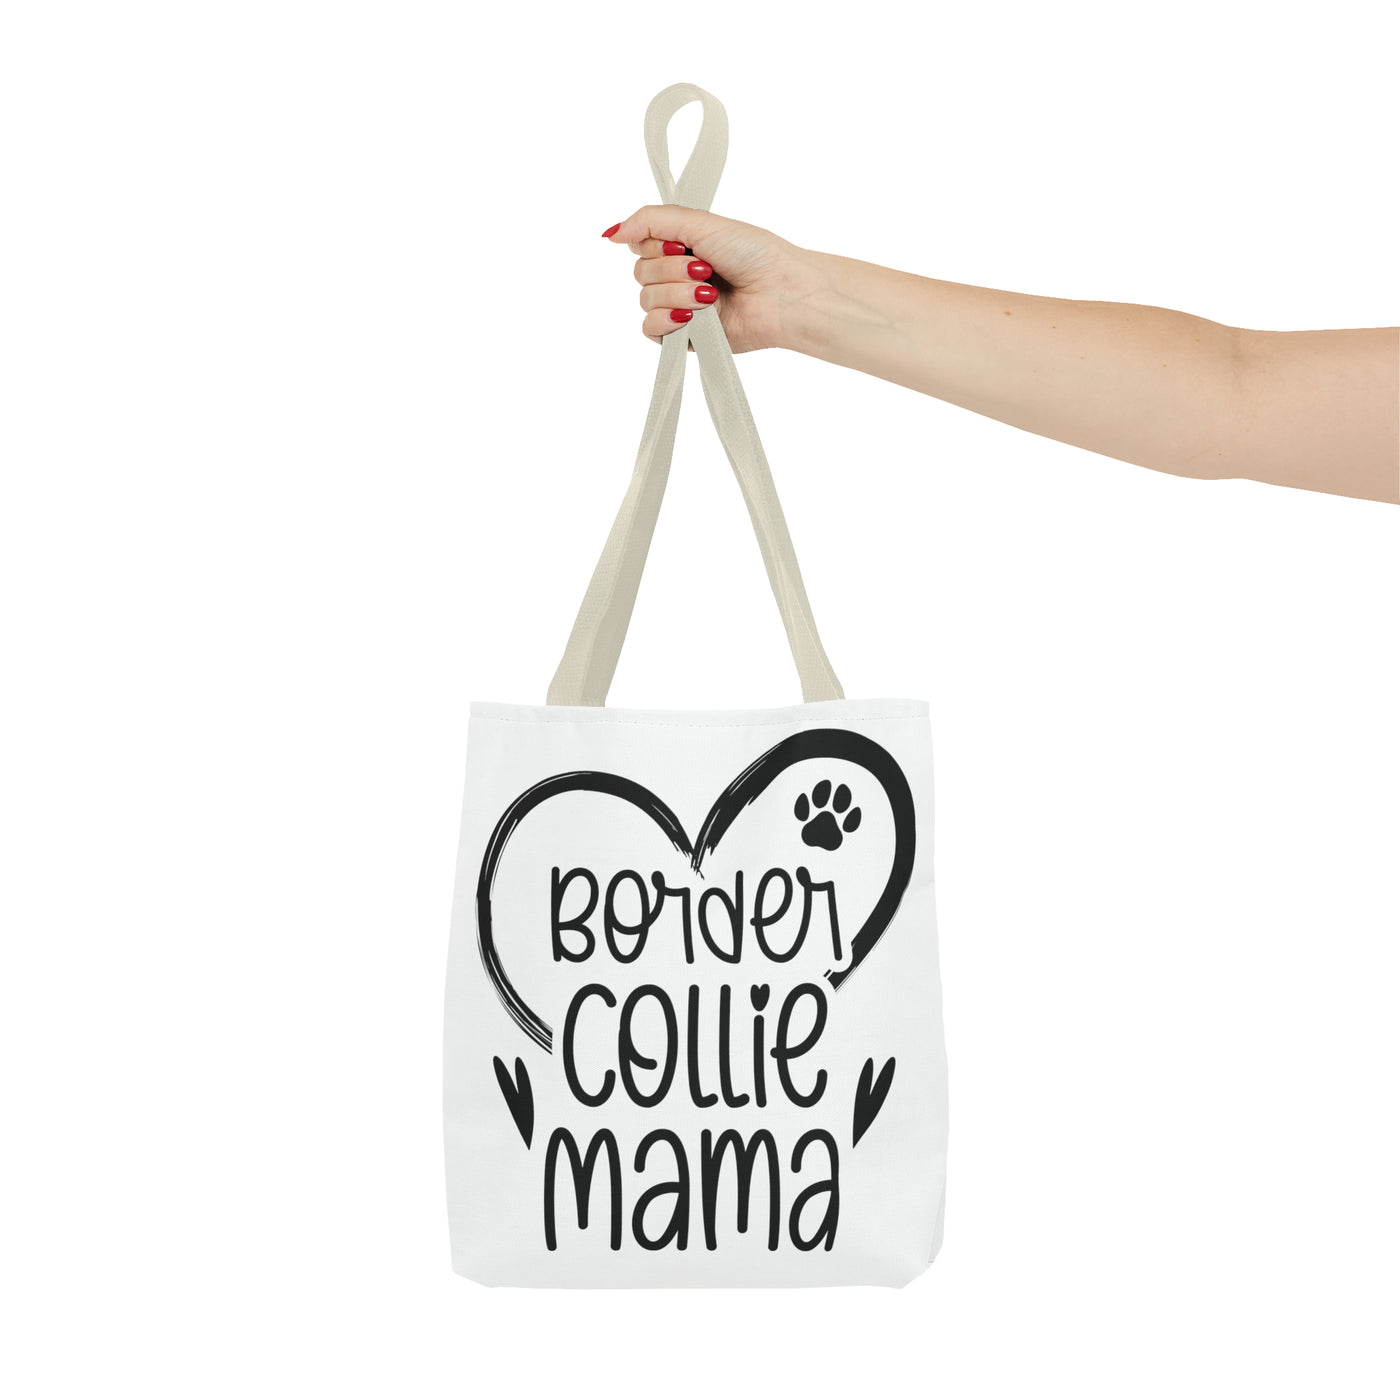 Border Collie Mama Tote Bag